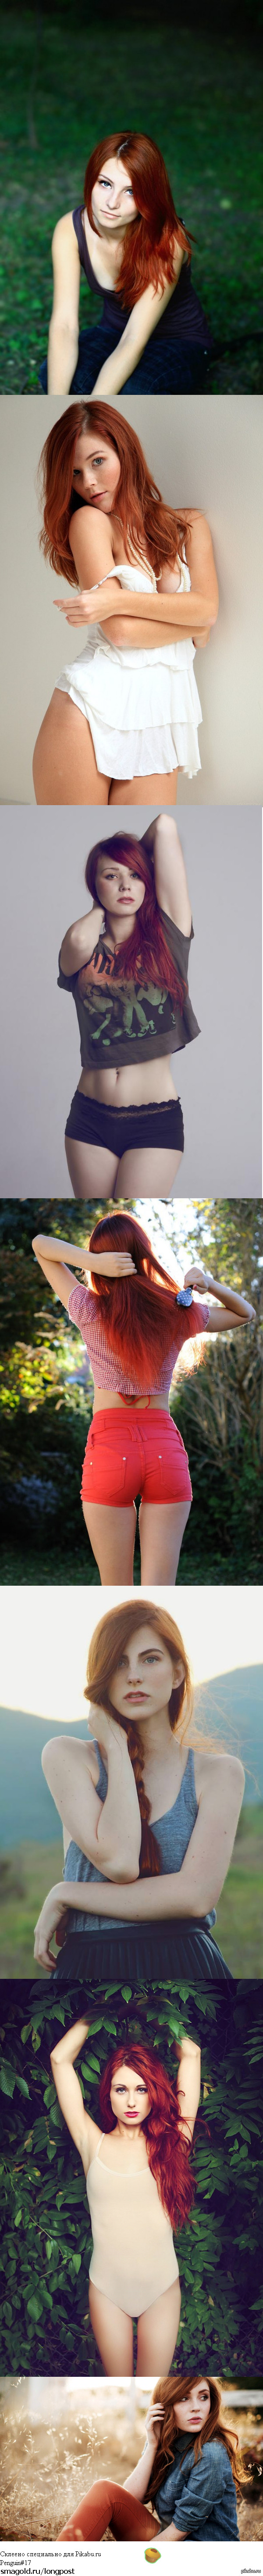 7 gorgeous redhead cuties. Part 2. - NSFW, Girls, beauty, Redheads, Redhead girl, Legs, Milota, Longpost